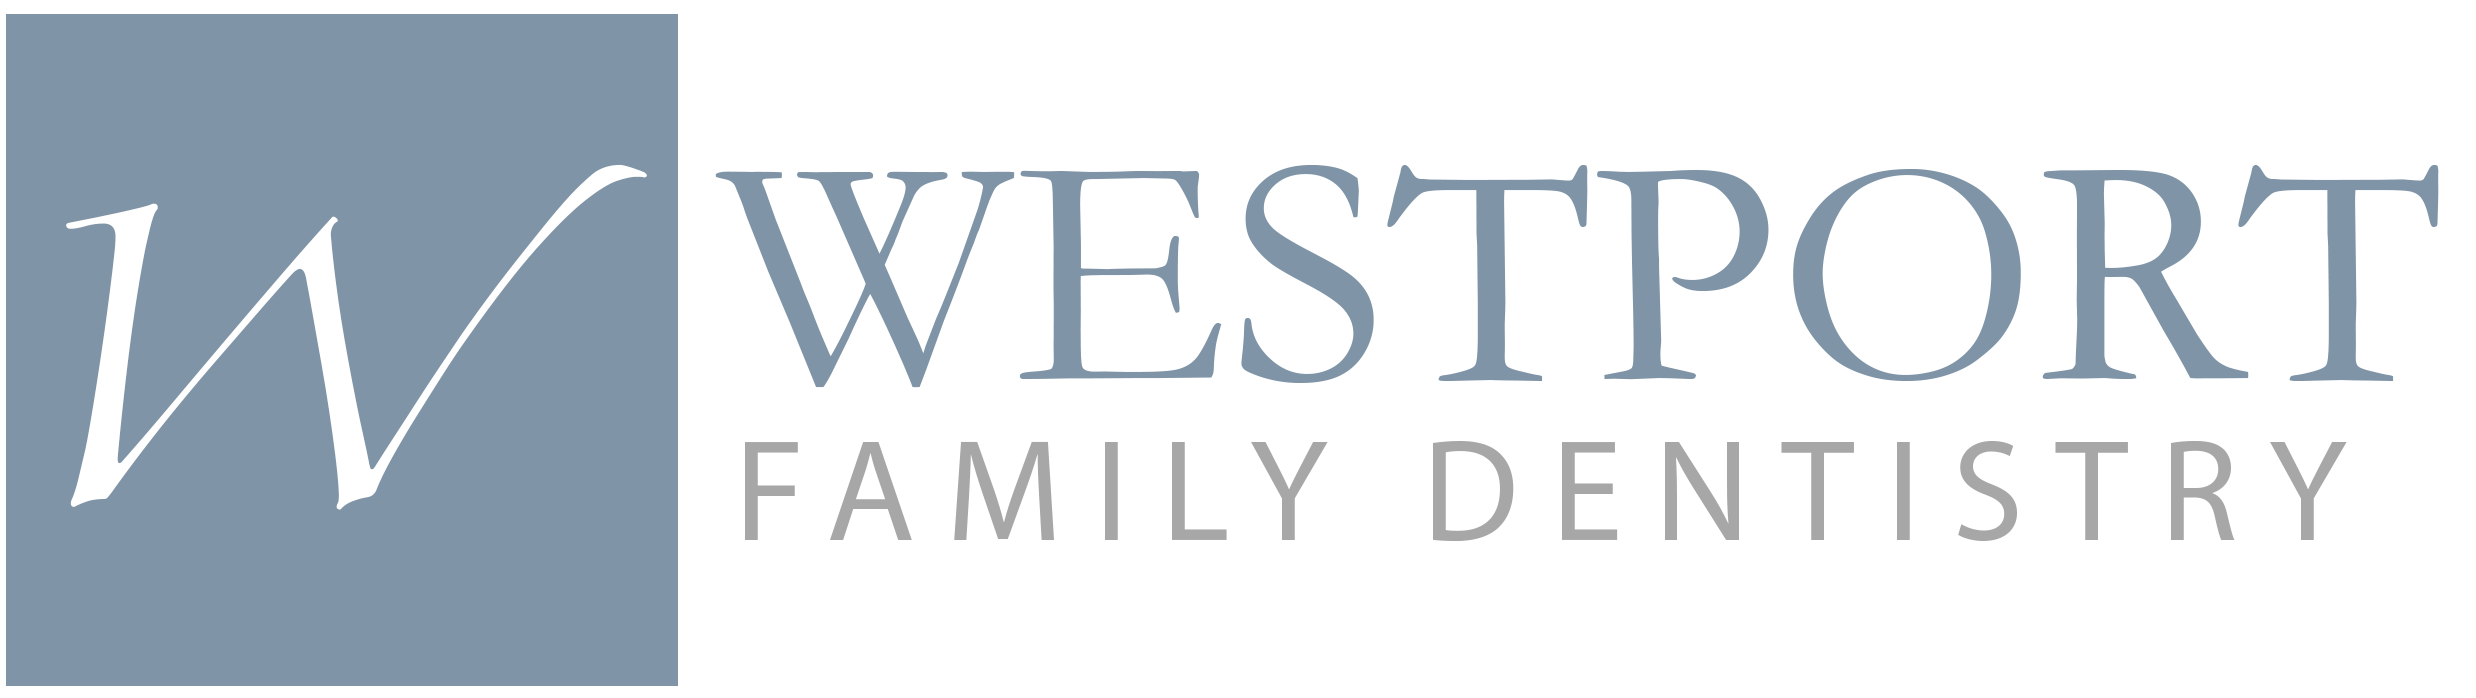 Westport Family Dentistry | Jeffrey Hill DDS | Norman Oklahoma Family Dentist